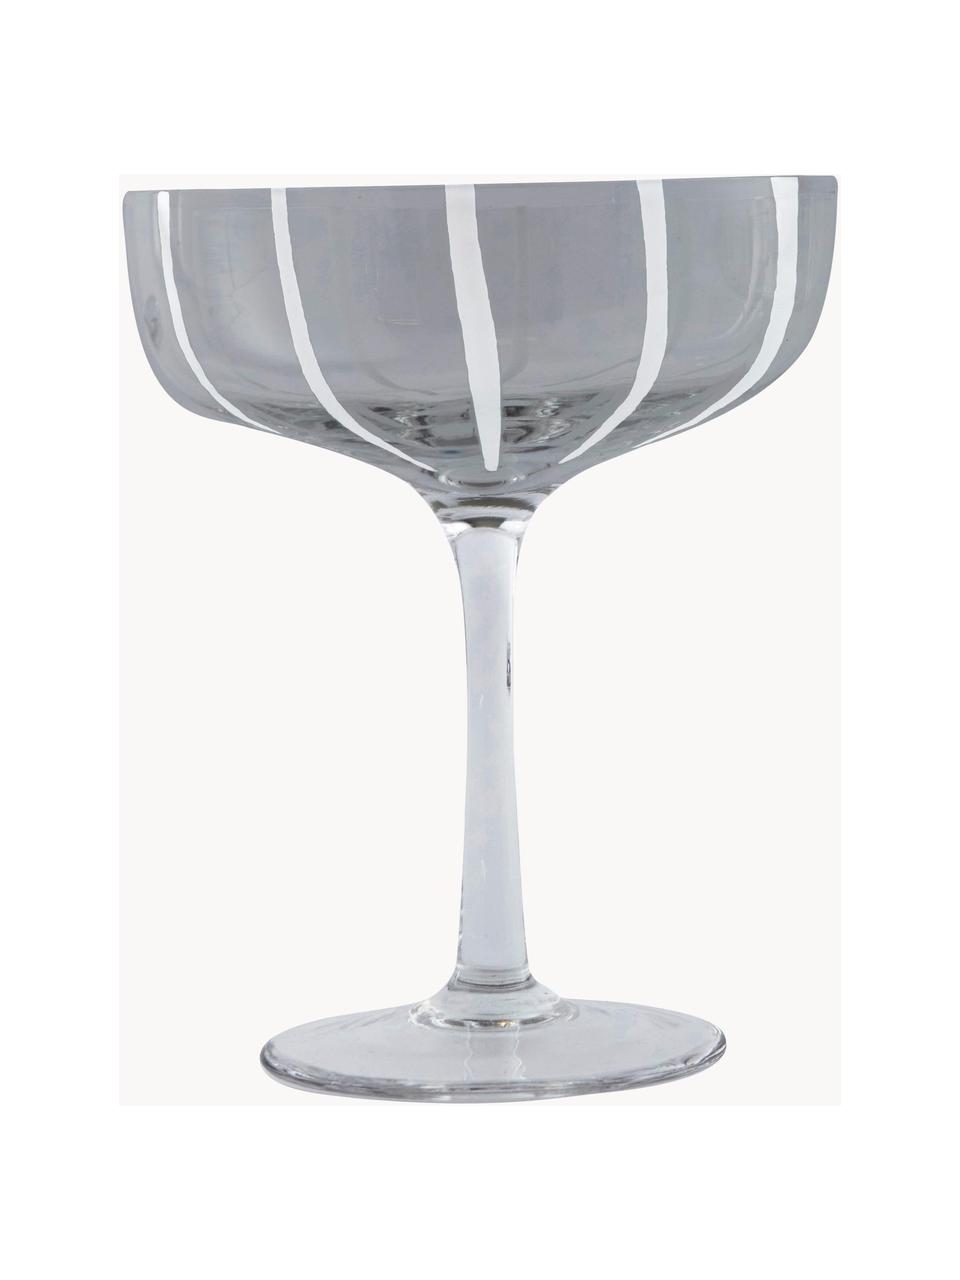 Coppa champagne in vetro soffiato Mizu, 2 pz, Vetro, Grigio, bianco, Ø 11 x Alt. 14 cm, 230 ml